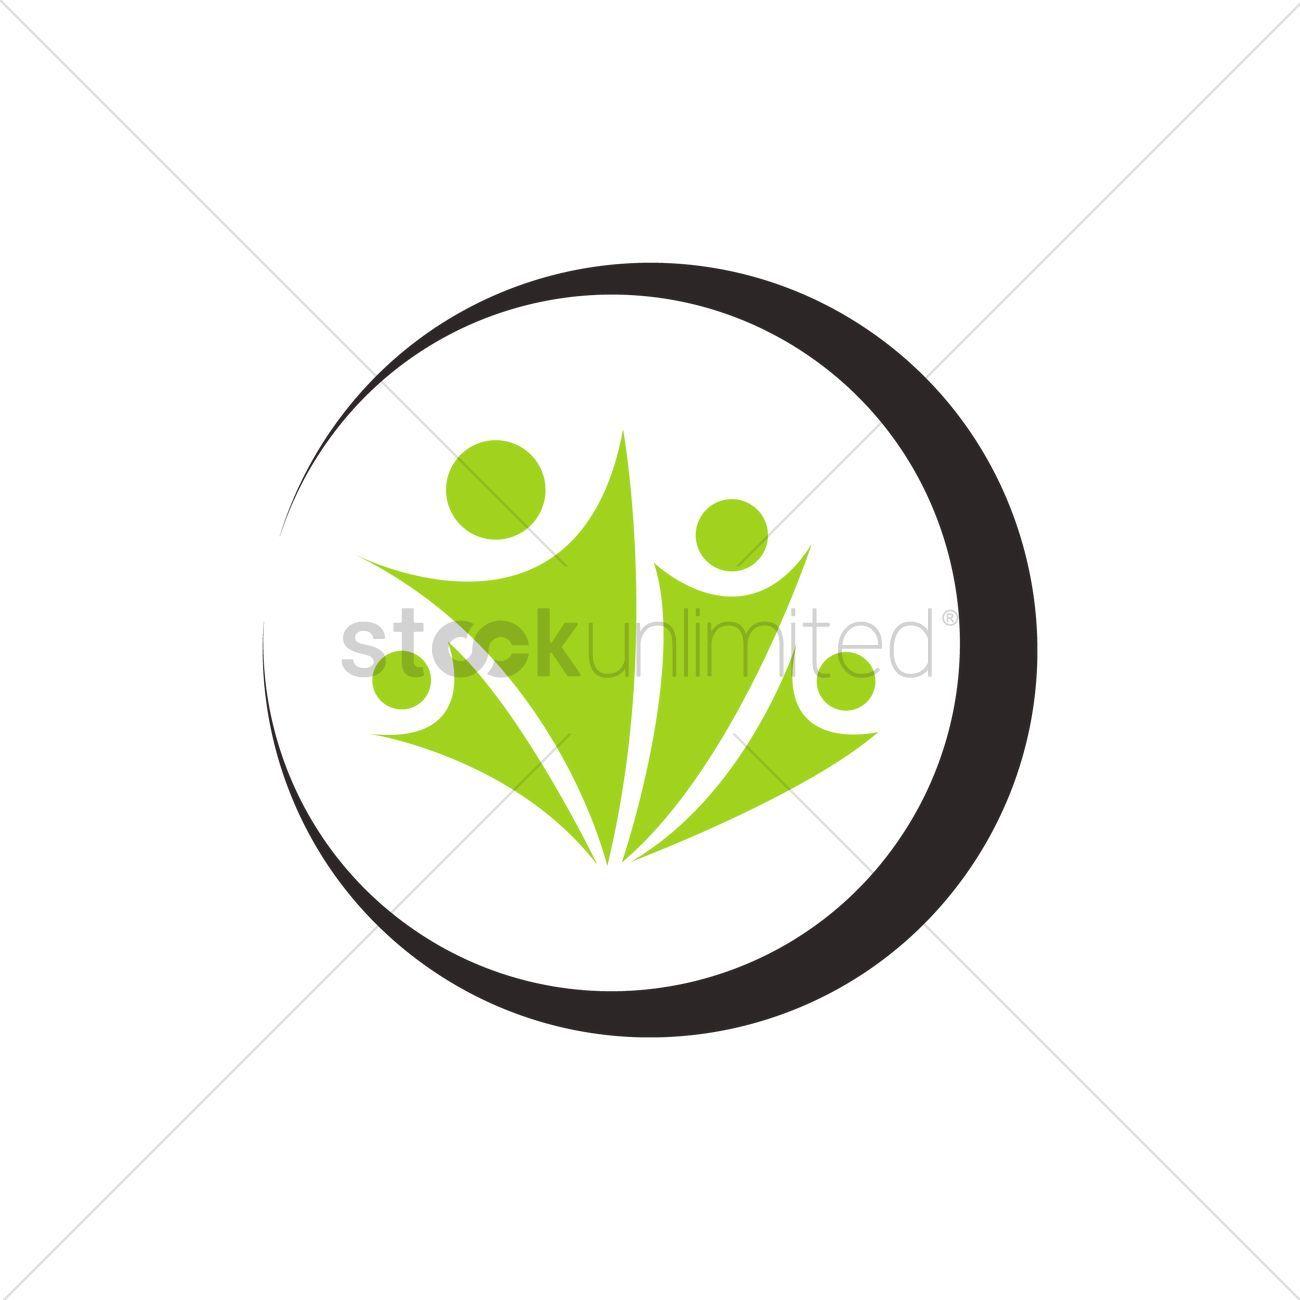 Family Circle Logo - Family circle logo Vector Image - 1270191 | StockUnlimited